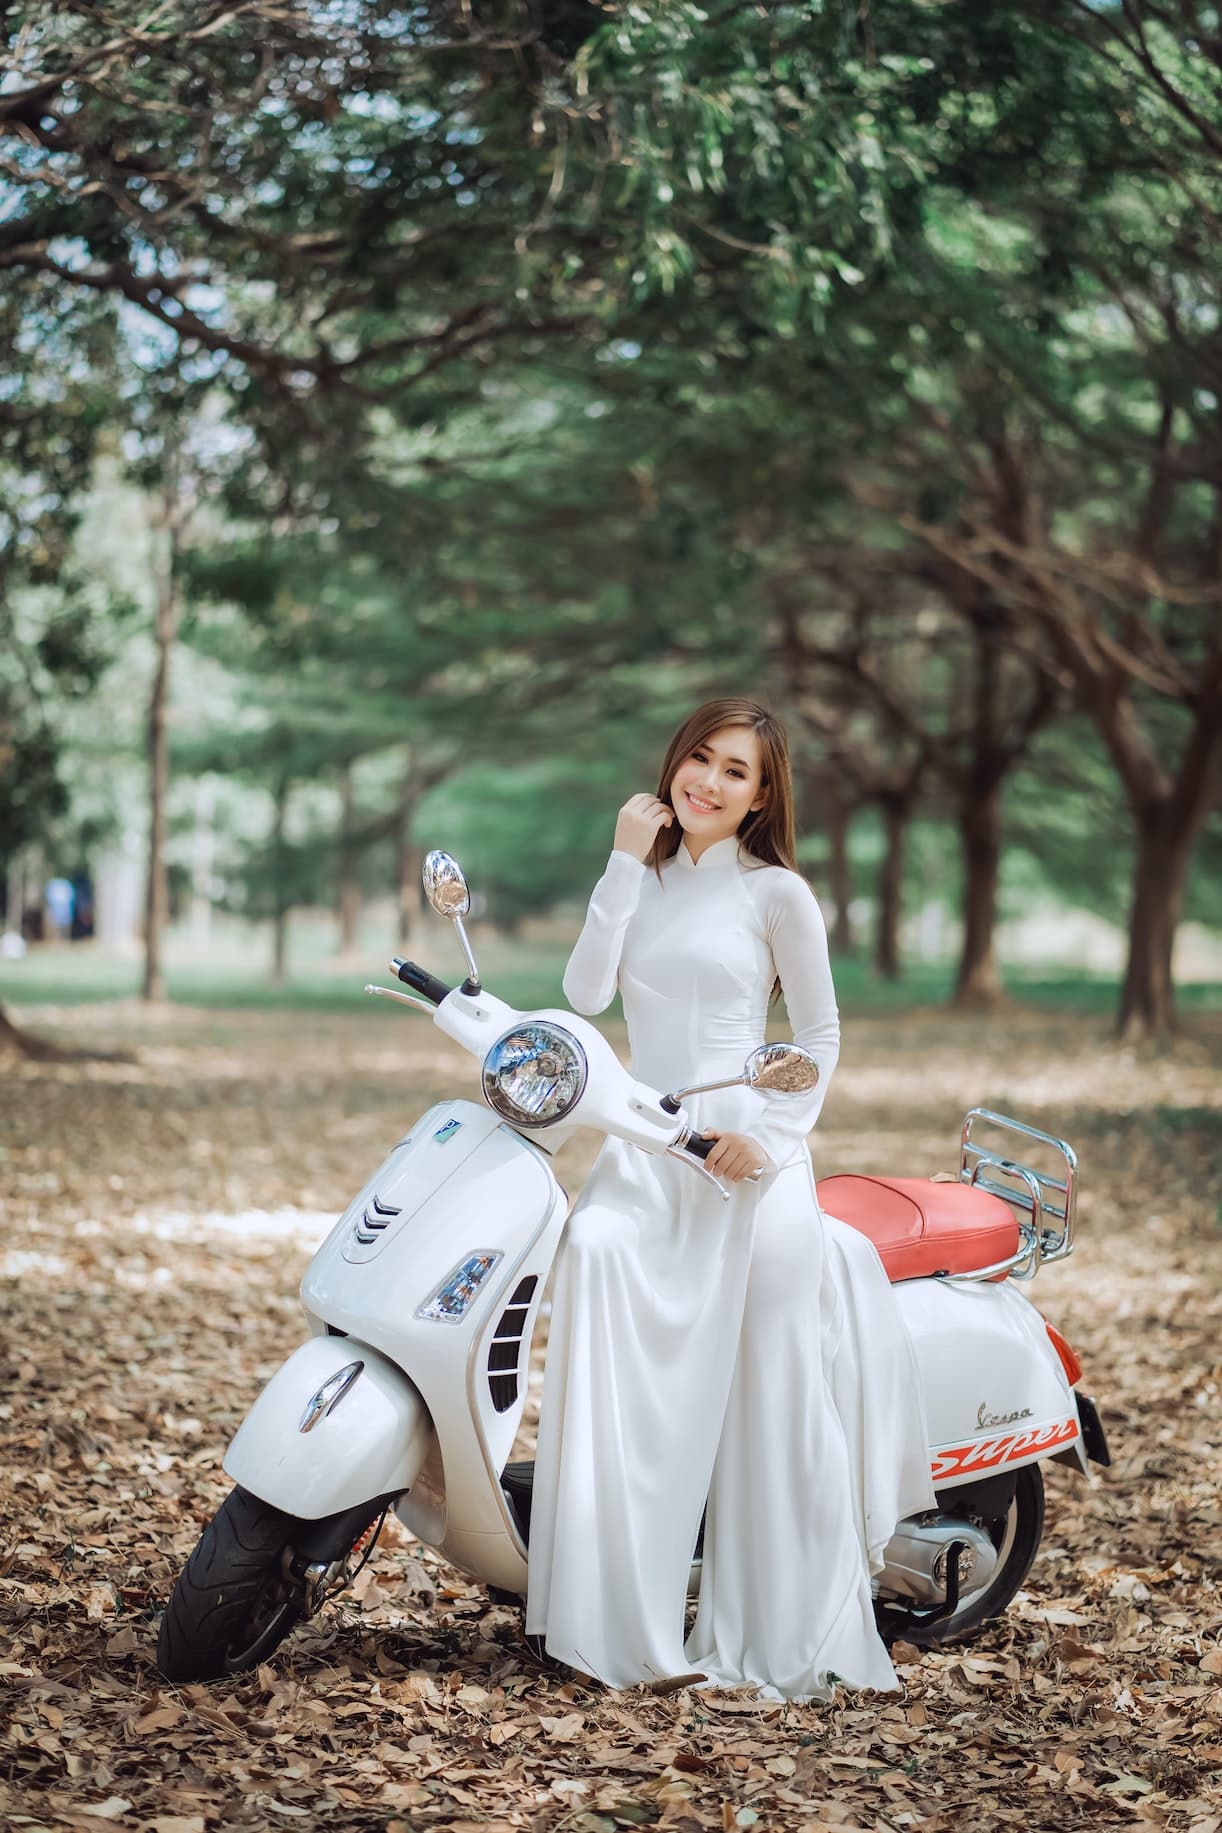 Bride on Motorcycle in Dress